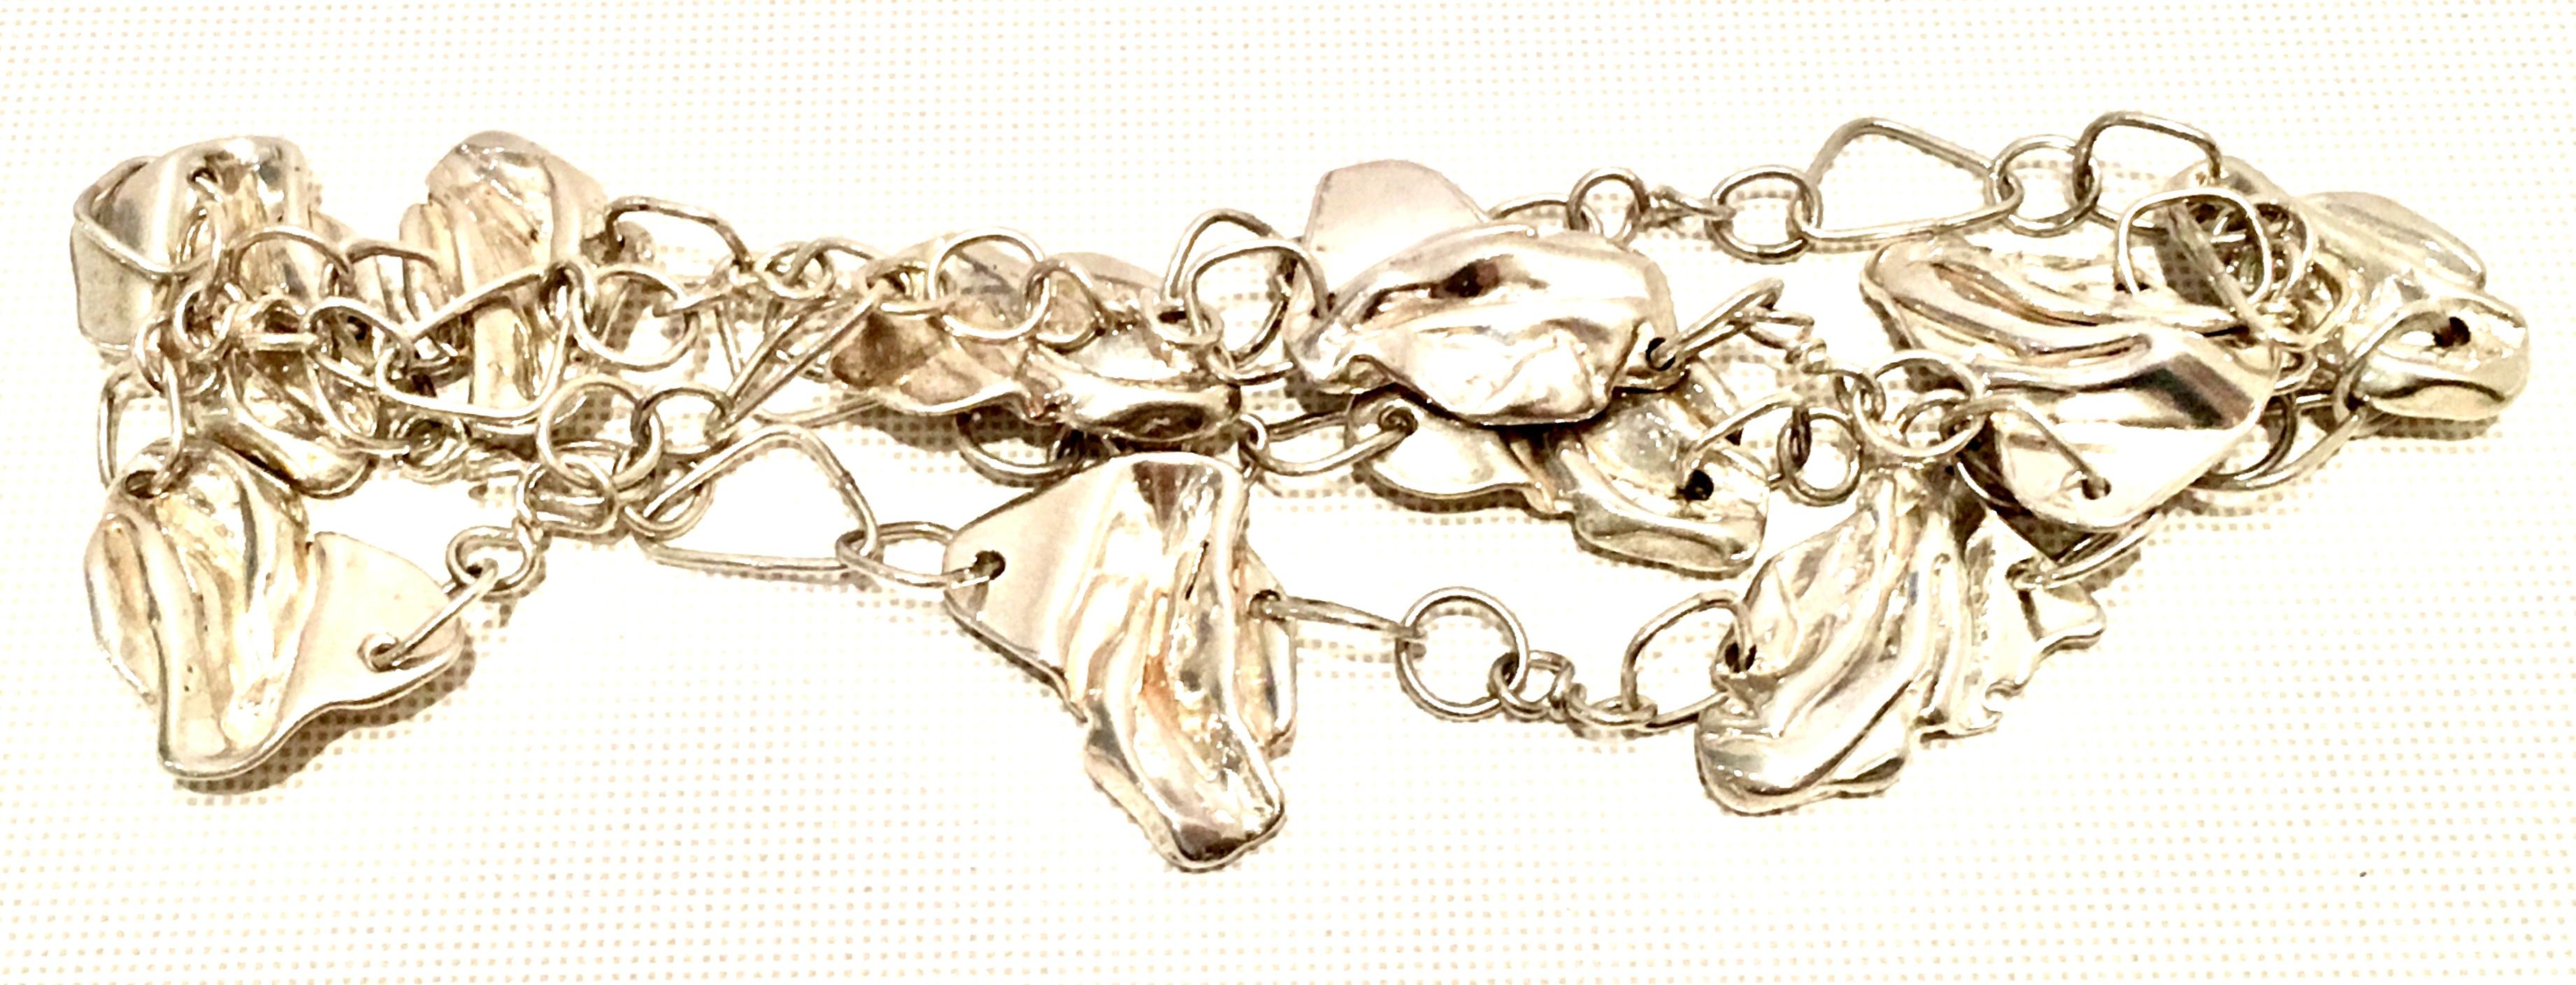 Vintage Sterling Silver Modernist Organic Form Chain Link Necklace For Sale 2